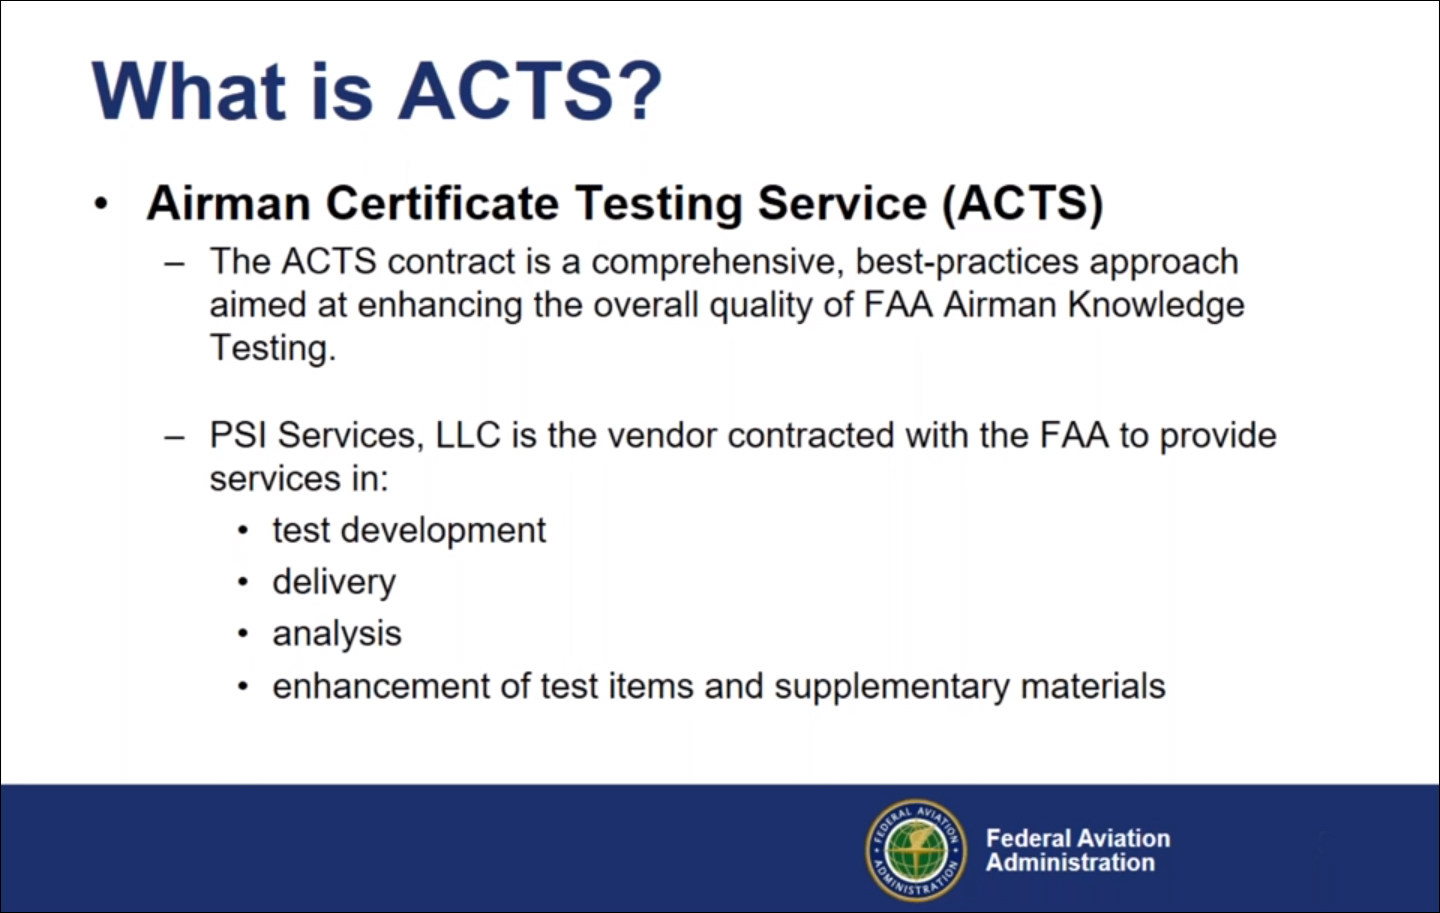 Airman Certificate Testing Service